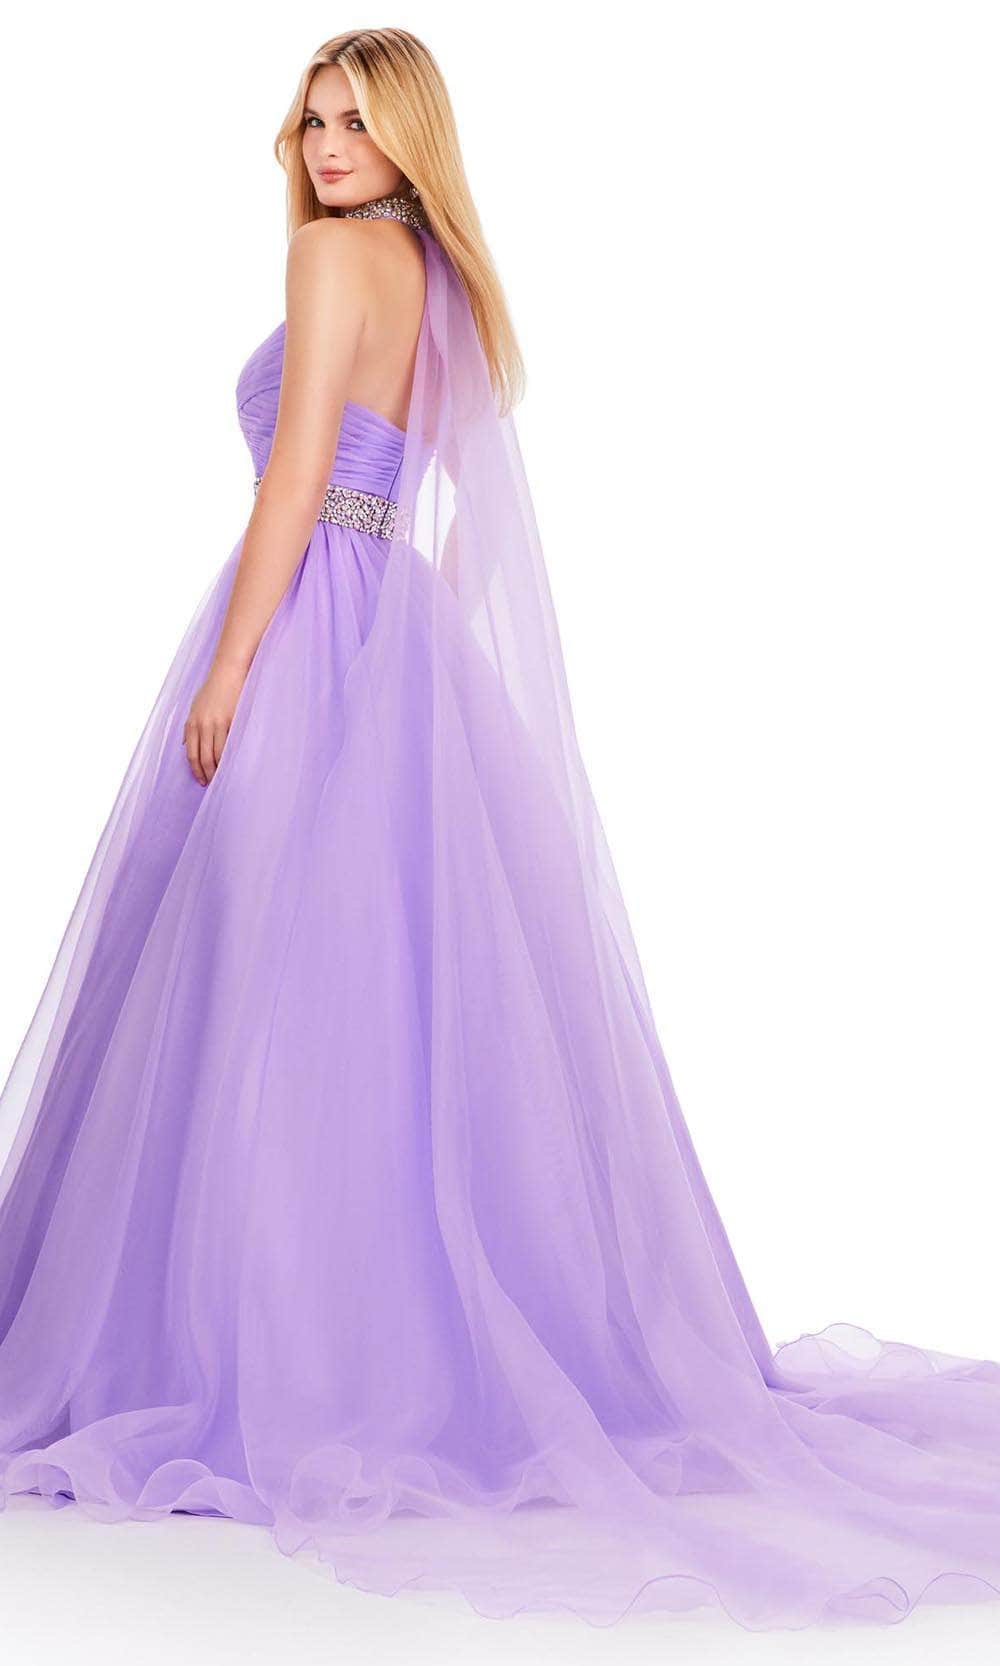 Ashley Lauren 11565 - Strapless Ballgown with Cape Ball Gowns